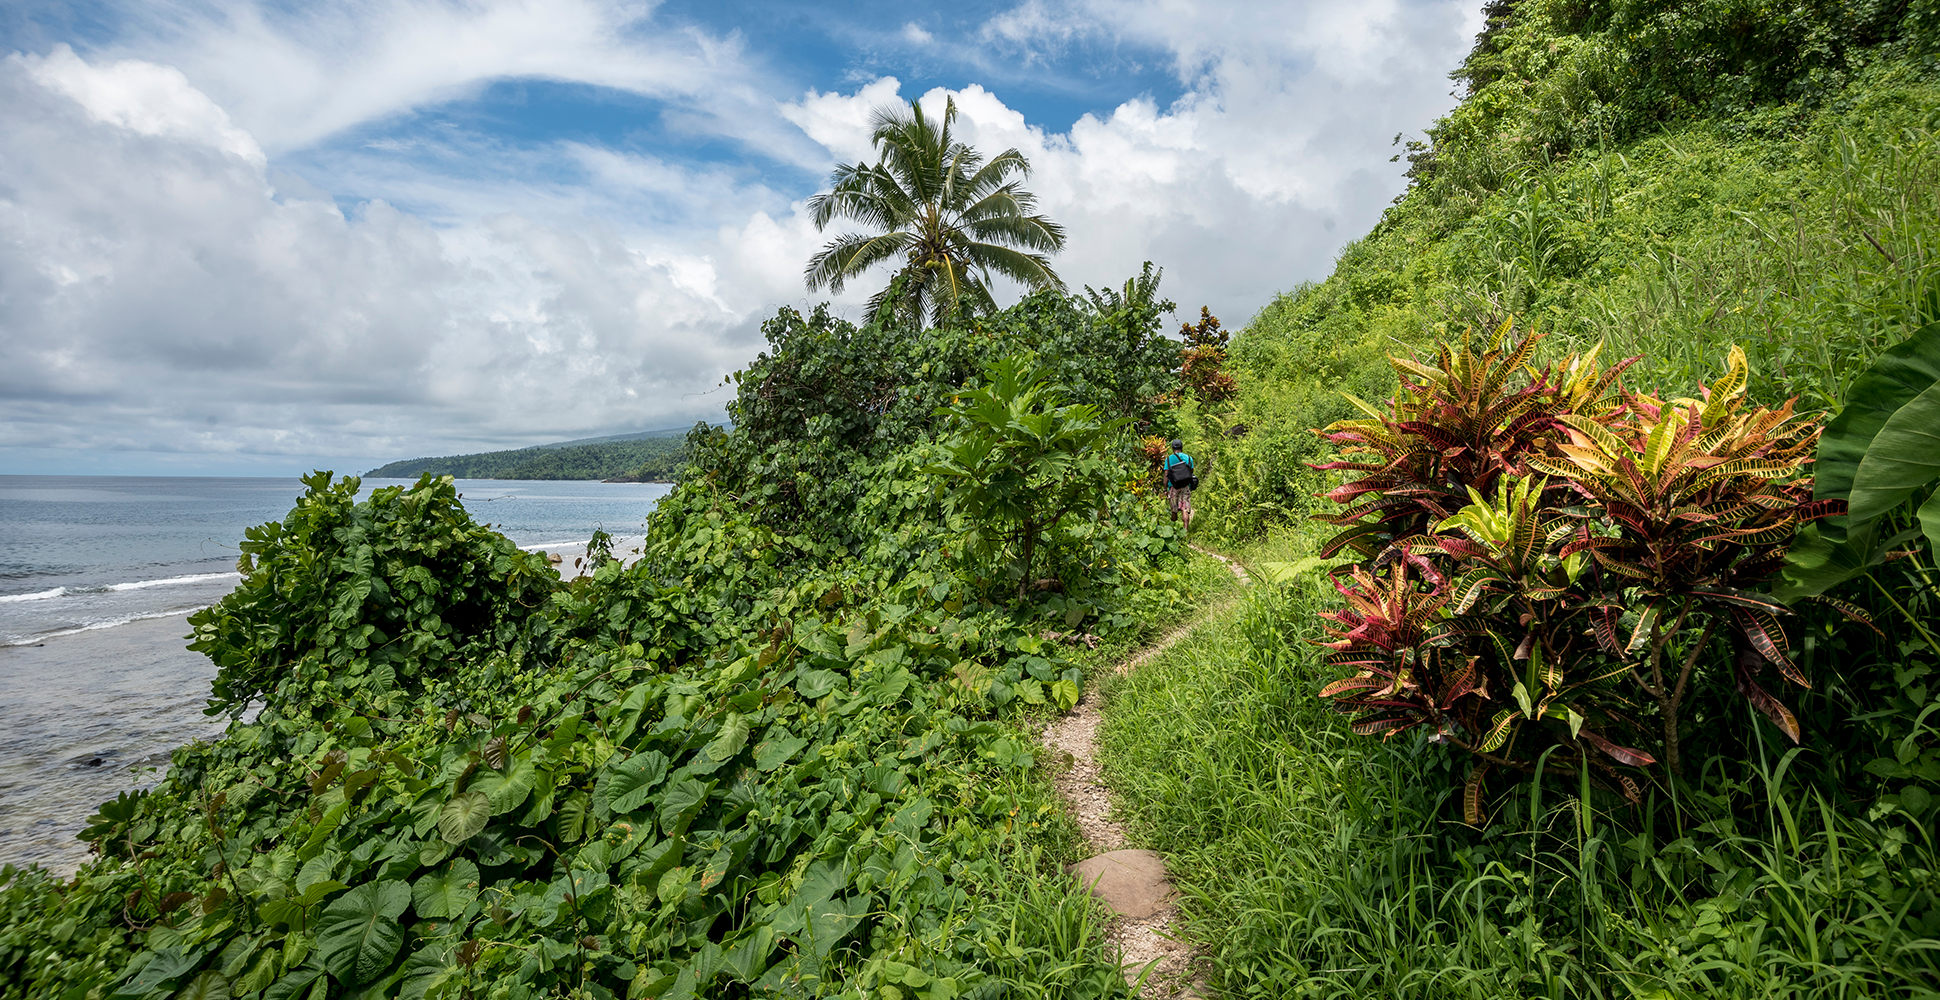 Hiking Through Lush Fiji